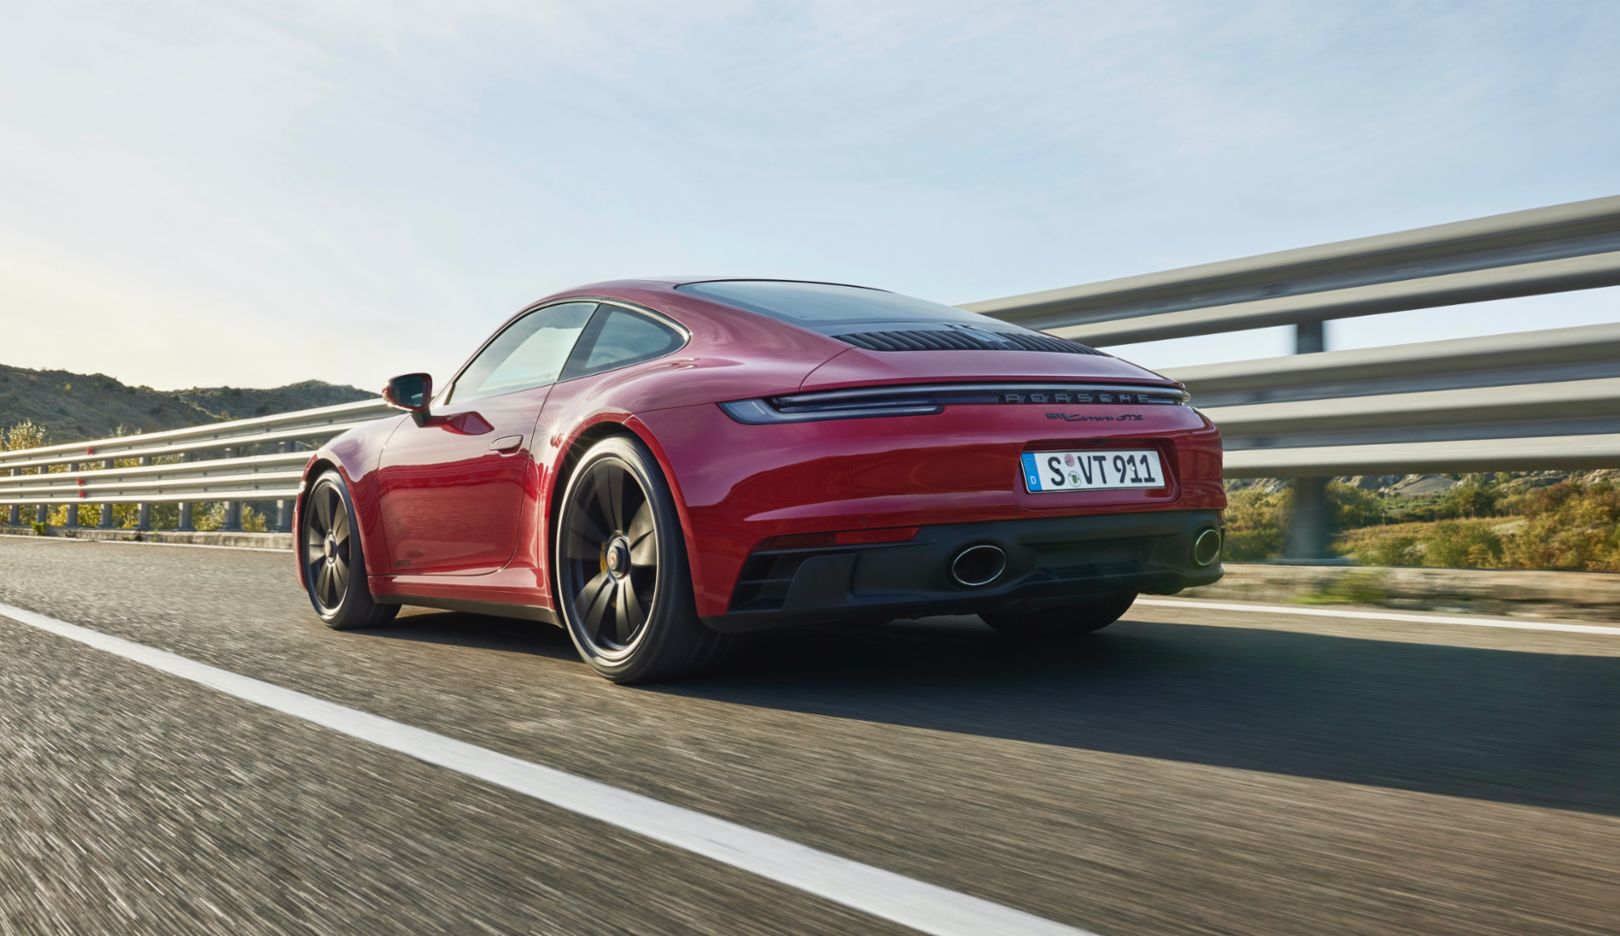 Knop Begeleiden Potentieel More distinctive and dynamic than ever: the new Porsche 911 GTS models -  Porsche Newsroom